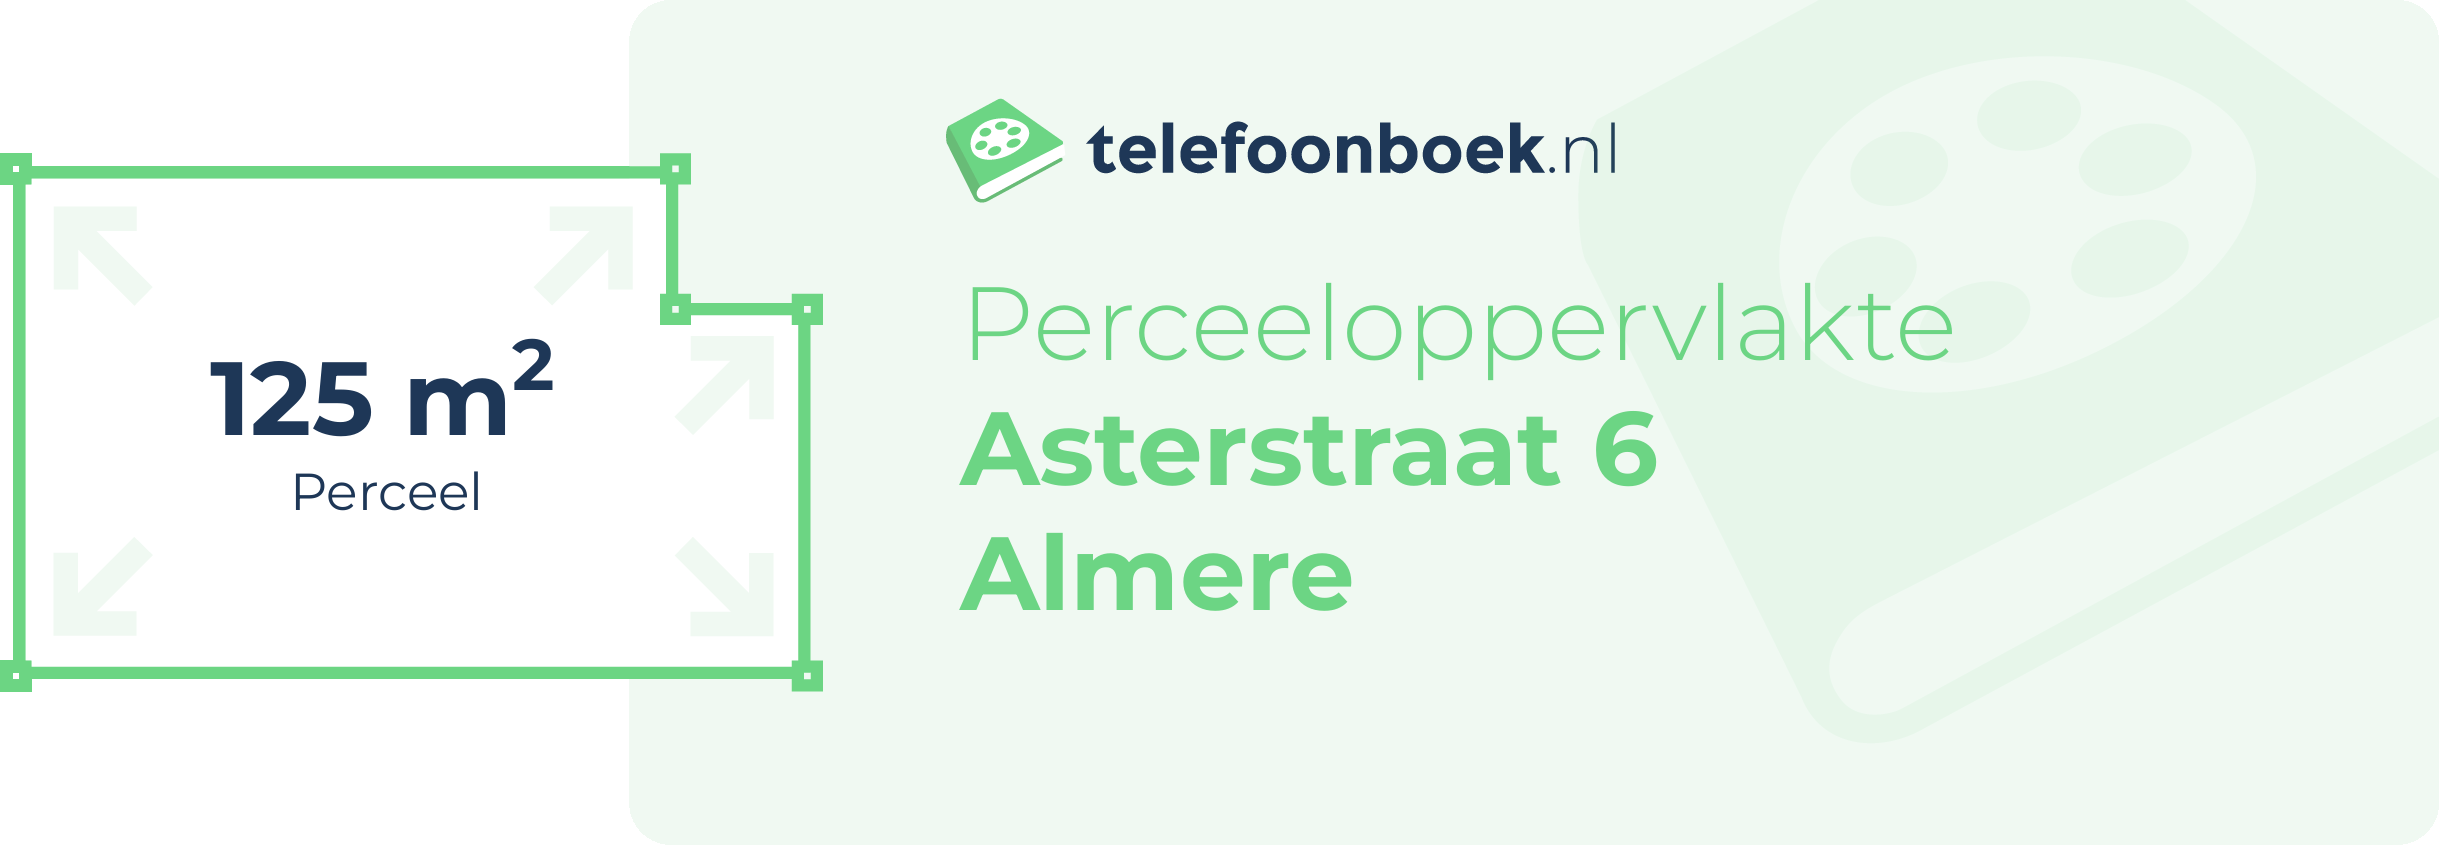 Perceeloppervlakte Asterstraat 6 Almere